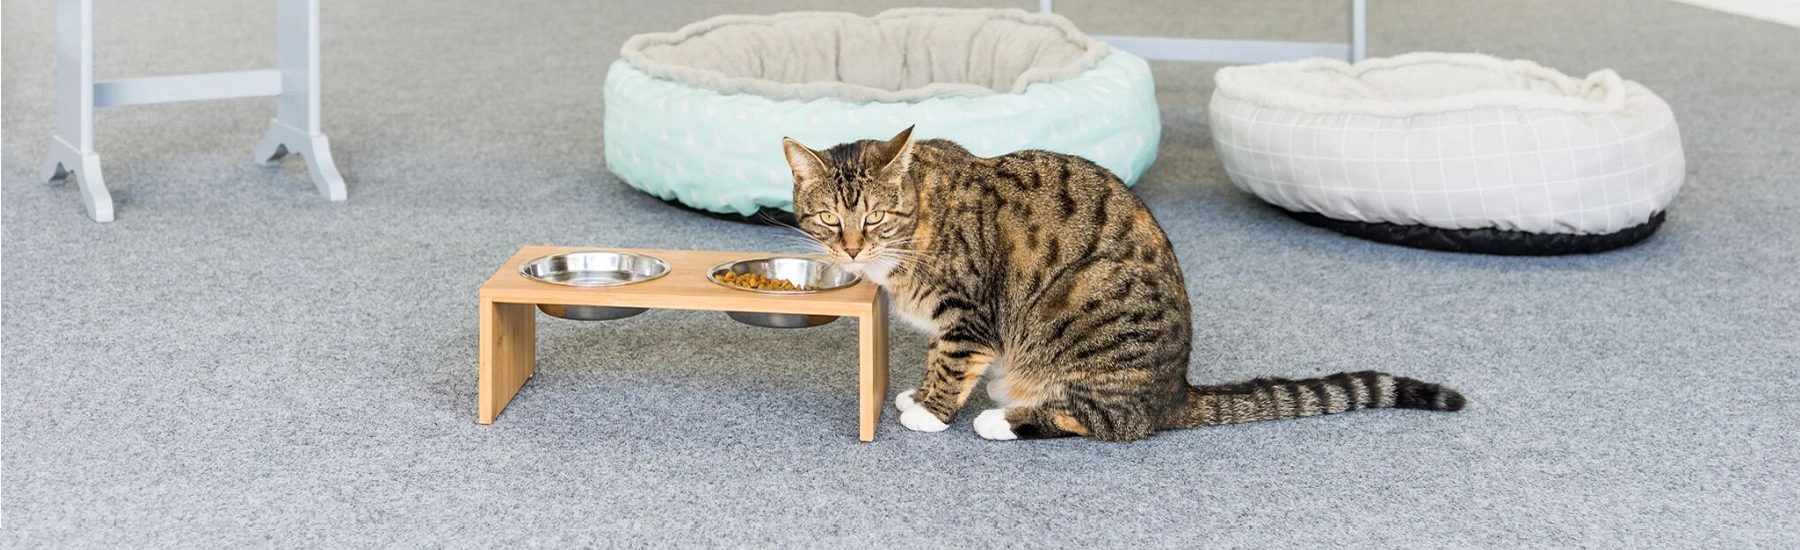 Cat on garage carpet - Australia 